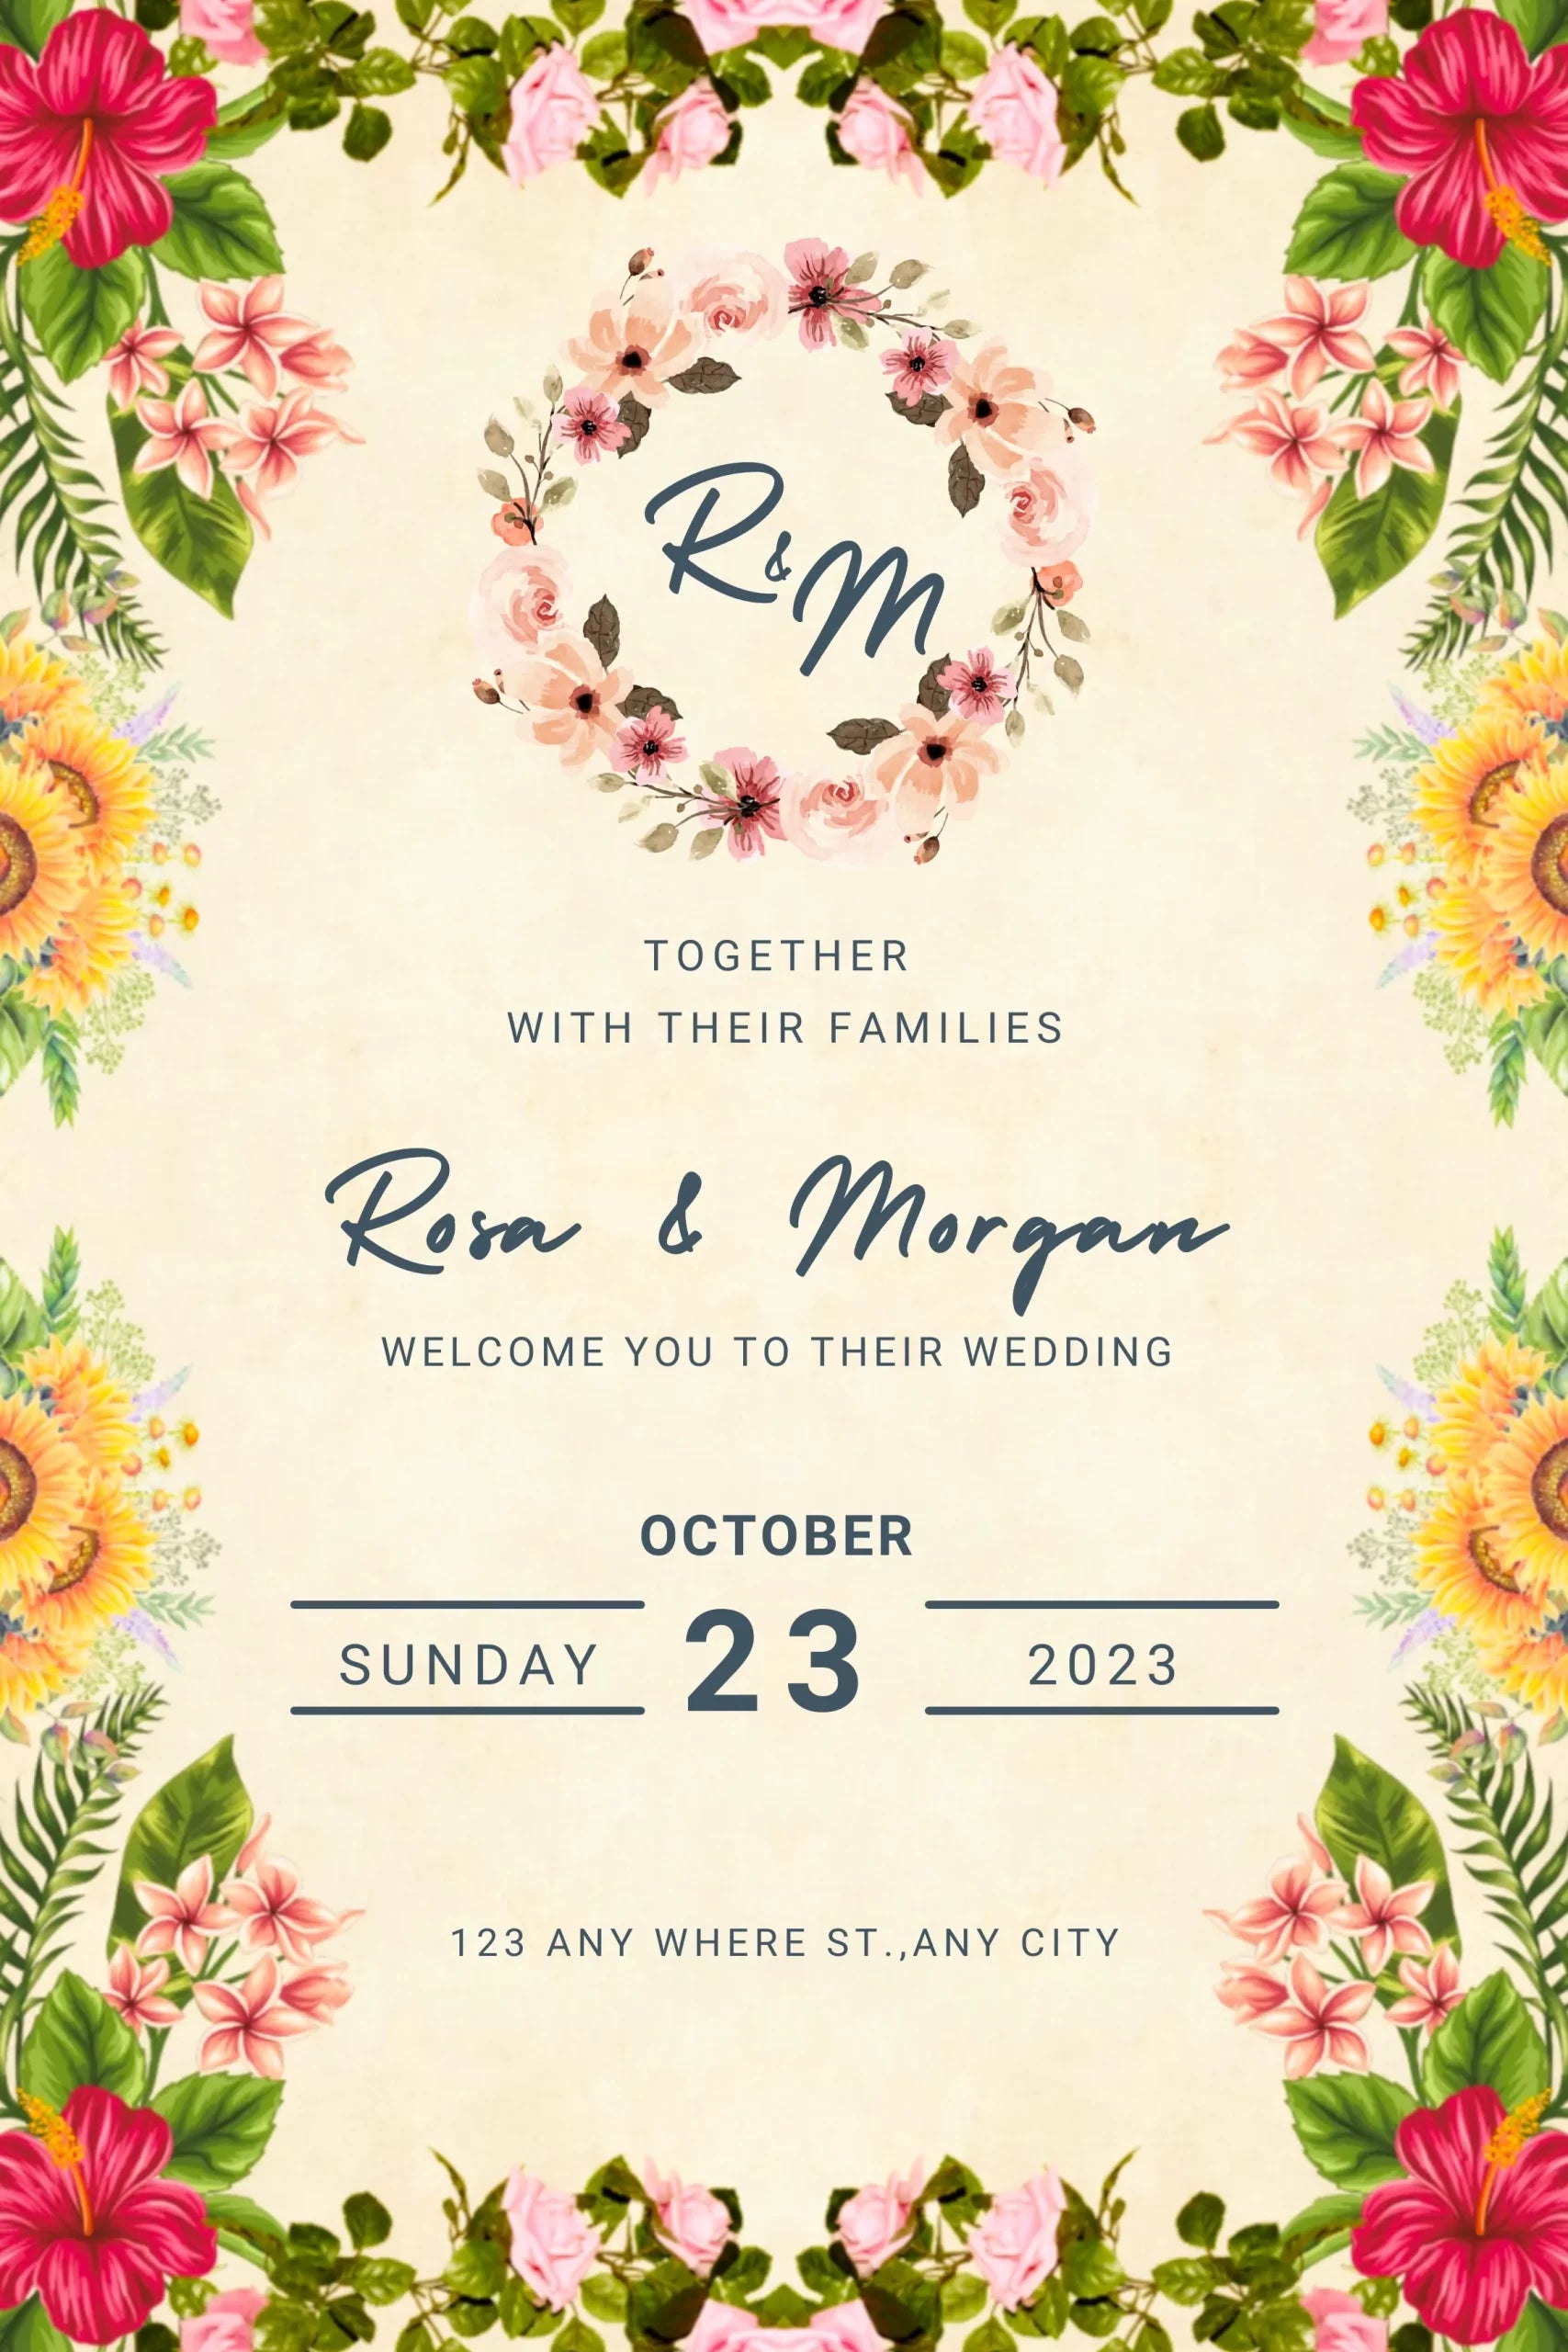 Engagement & Ring Ceremony Invitation Video - Happy Invites